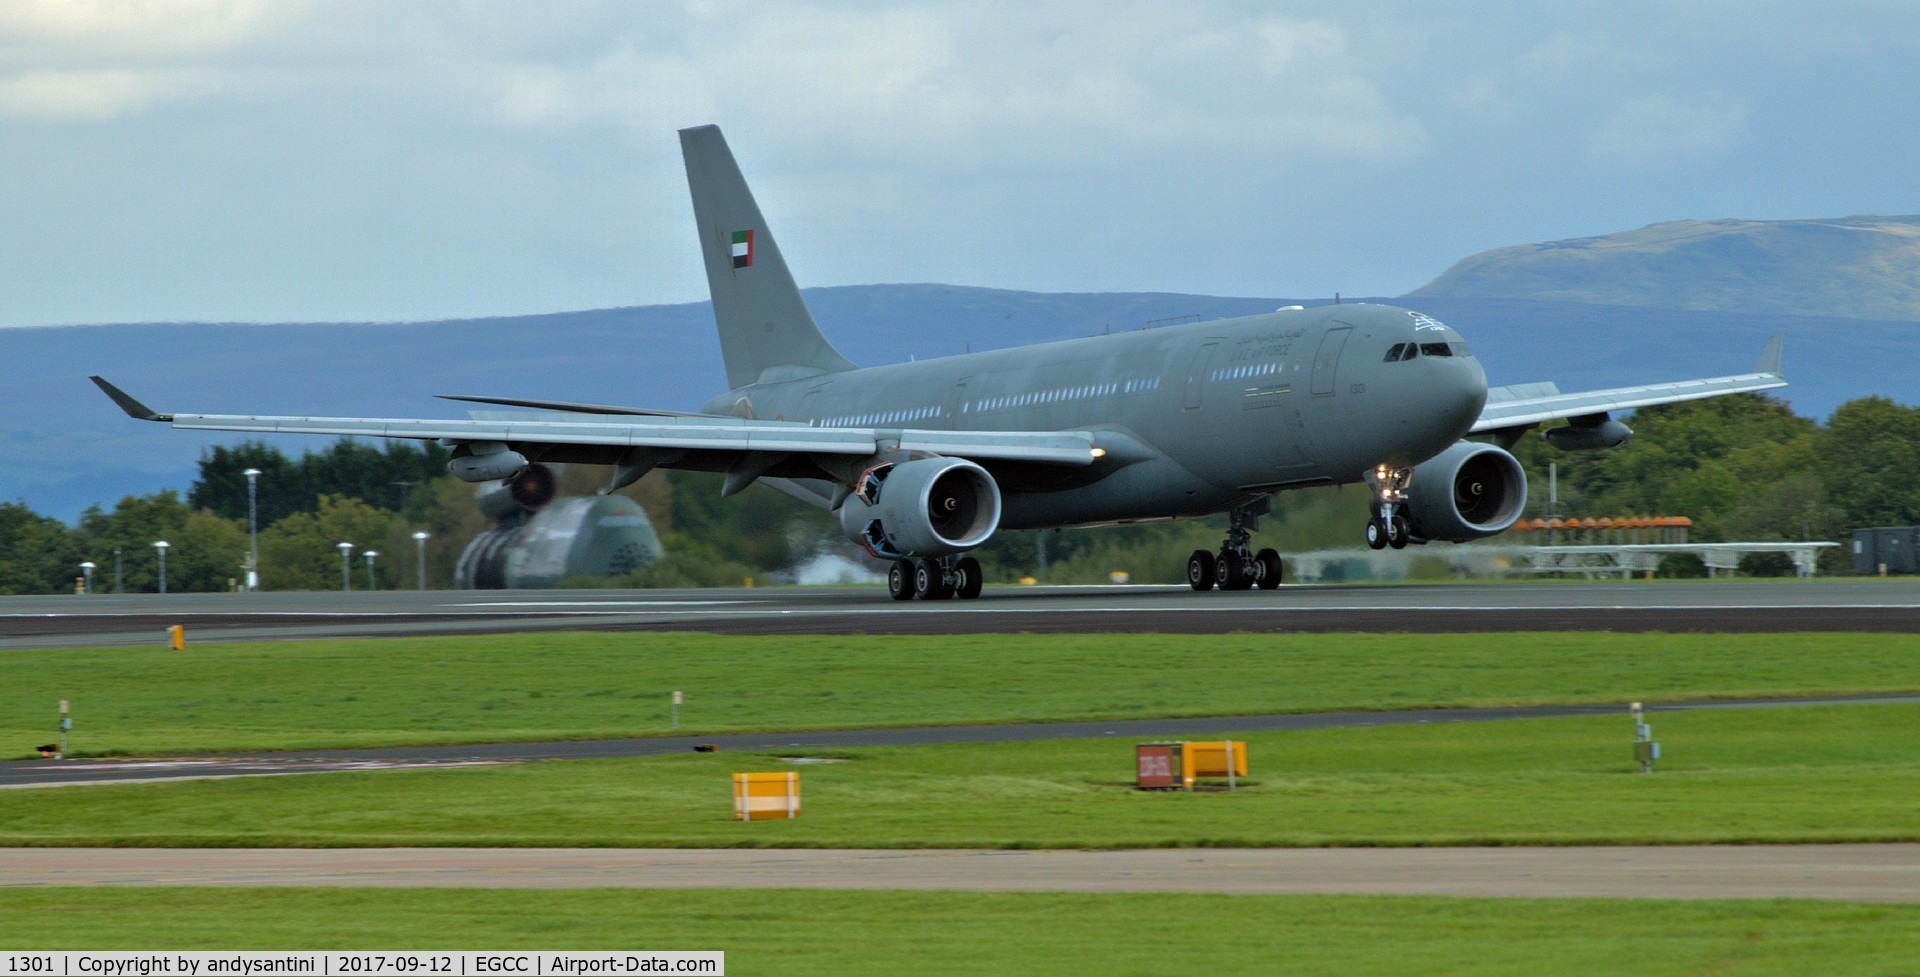 1301, 2010 Airbus A330-243/MRTT C/N 1186, just landed on runway 23R @ egcc uk.